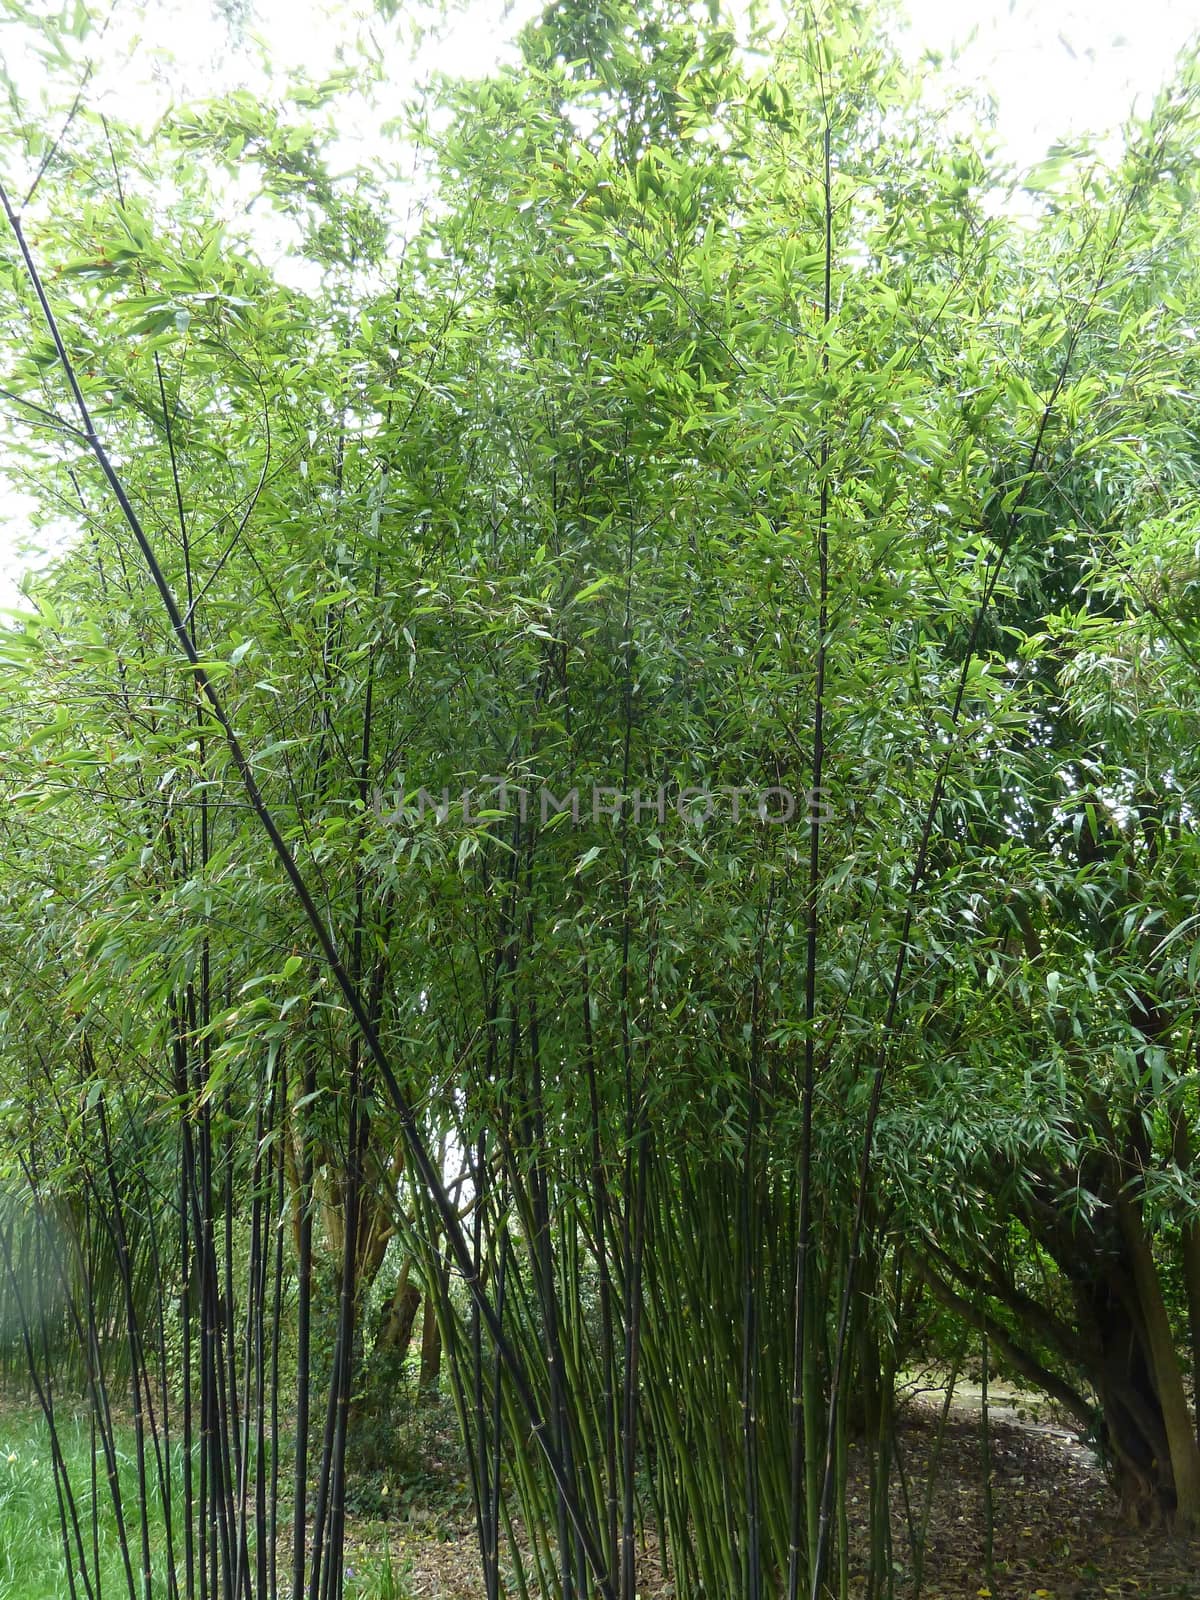 Bright green leaves on black bamboo stalks